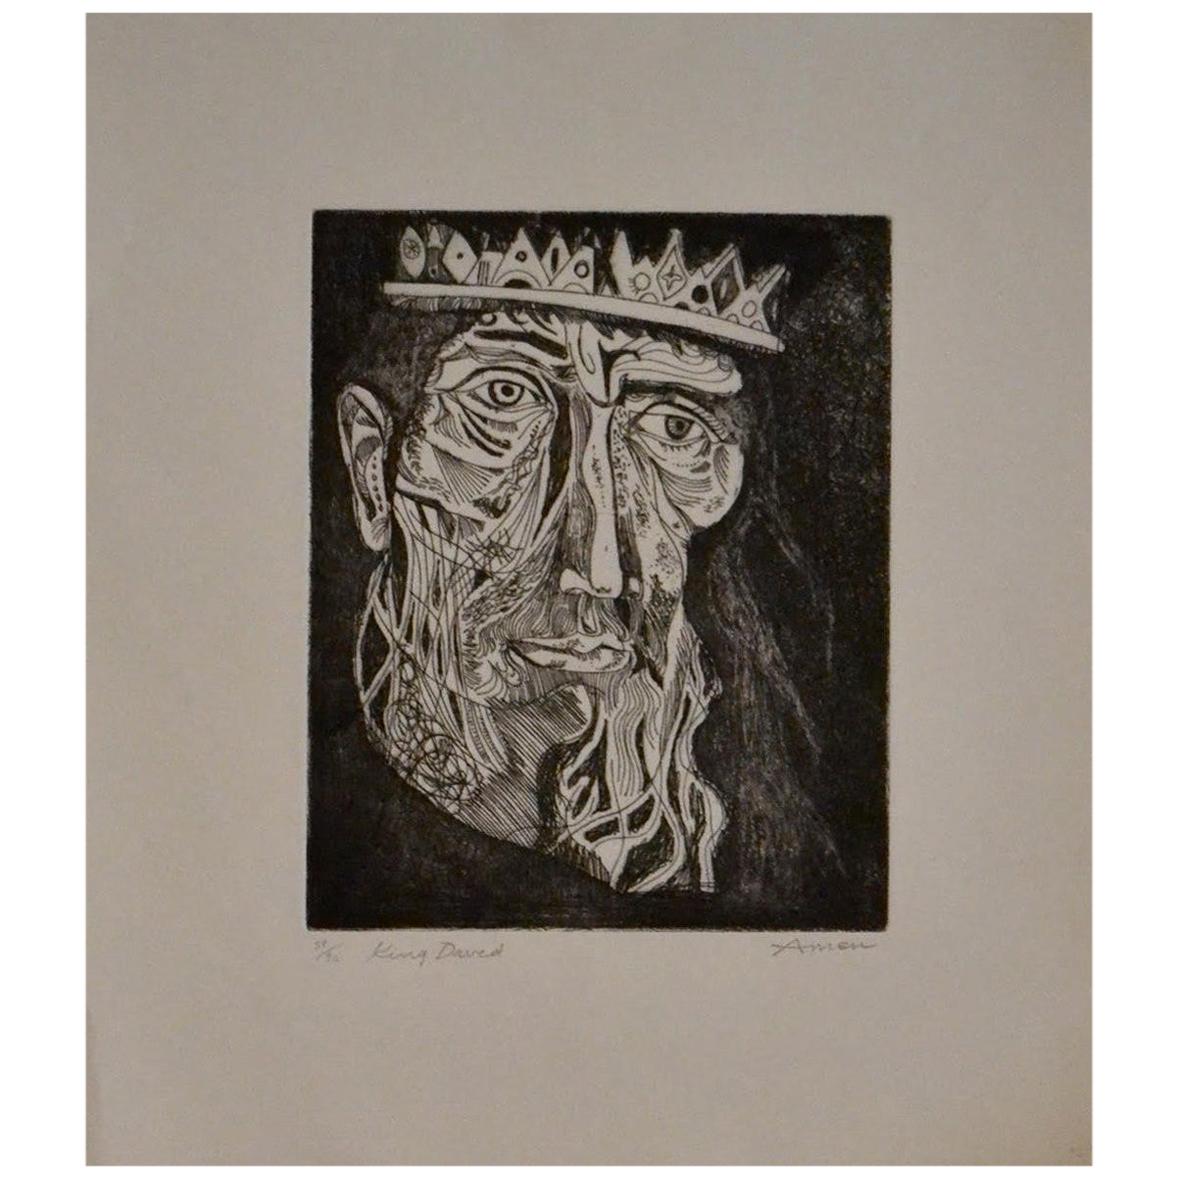 Irving Amen Signed Limited Edition Woodcut Print "King David"